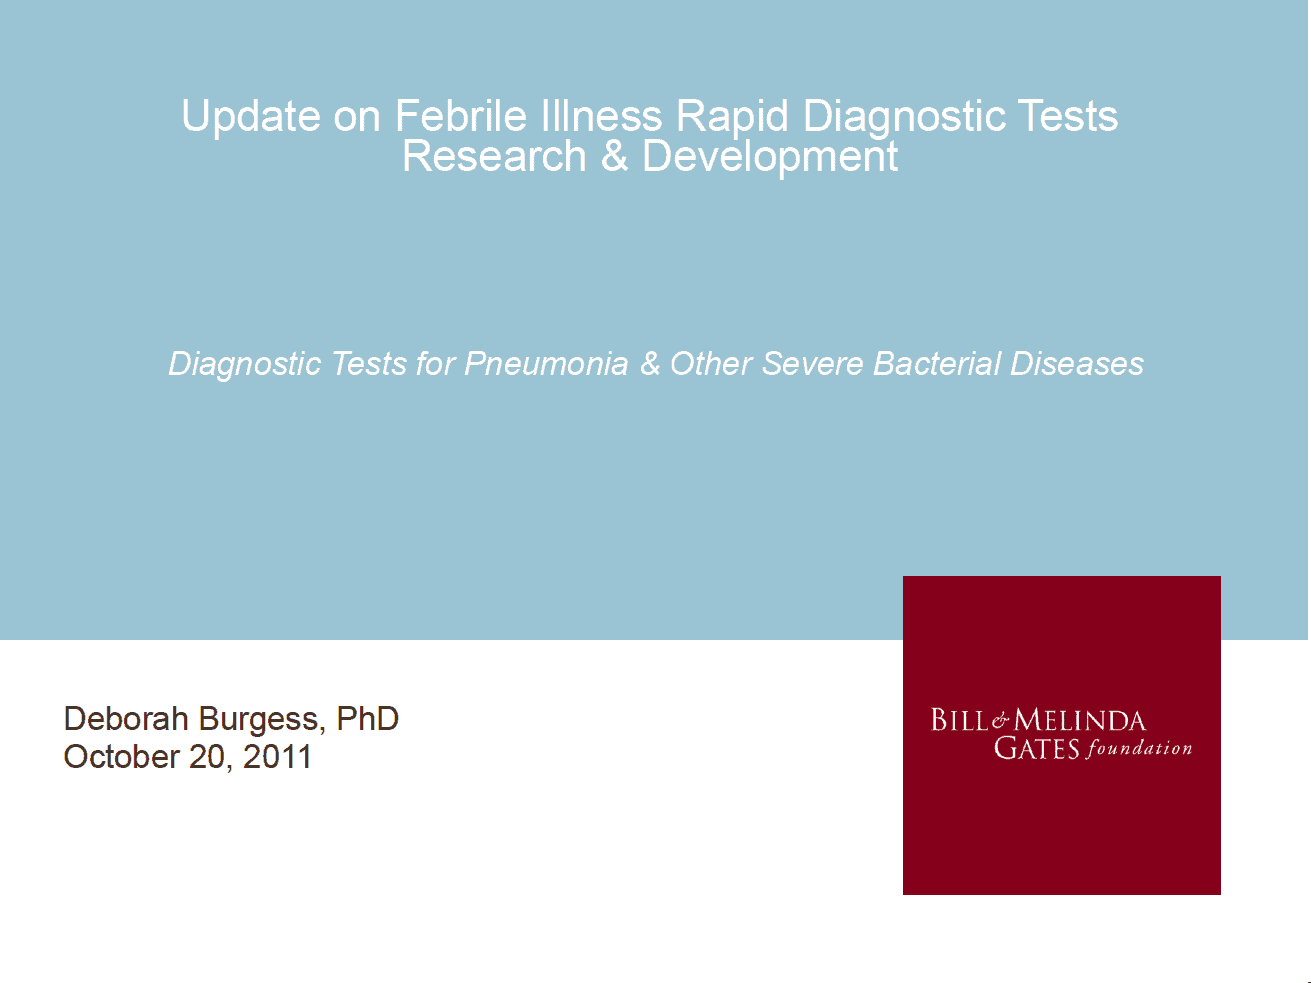 Update on Febrile Illness Rapid Diagnostic Tests Research & Development